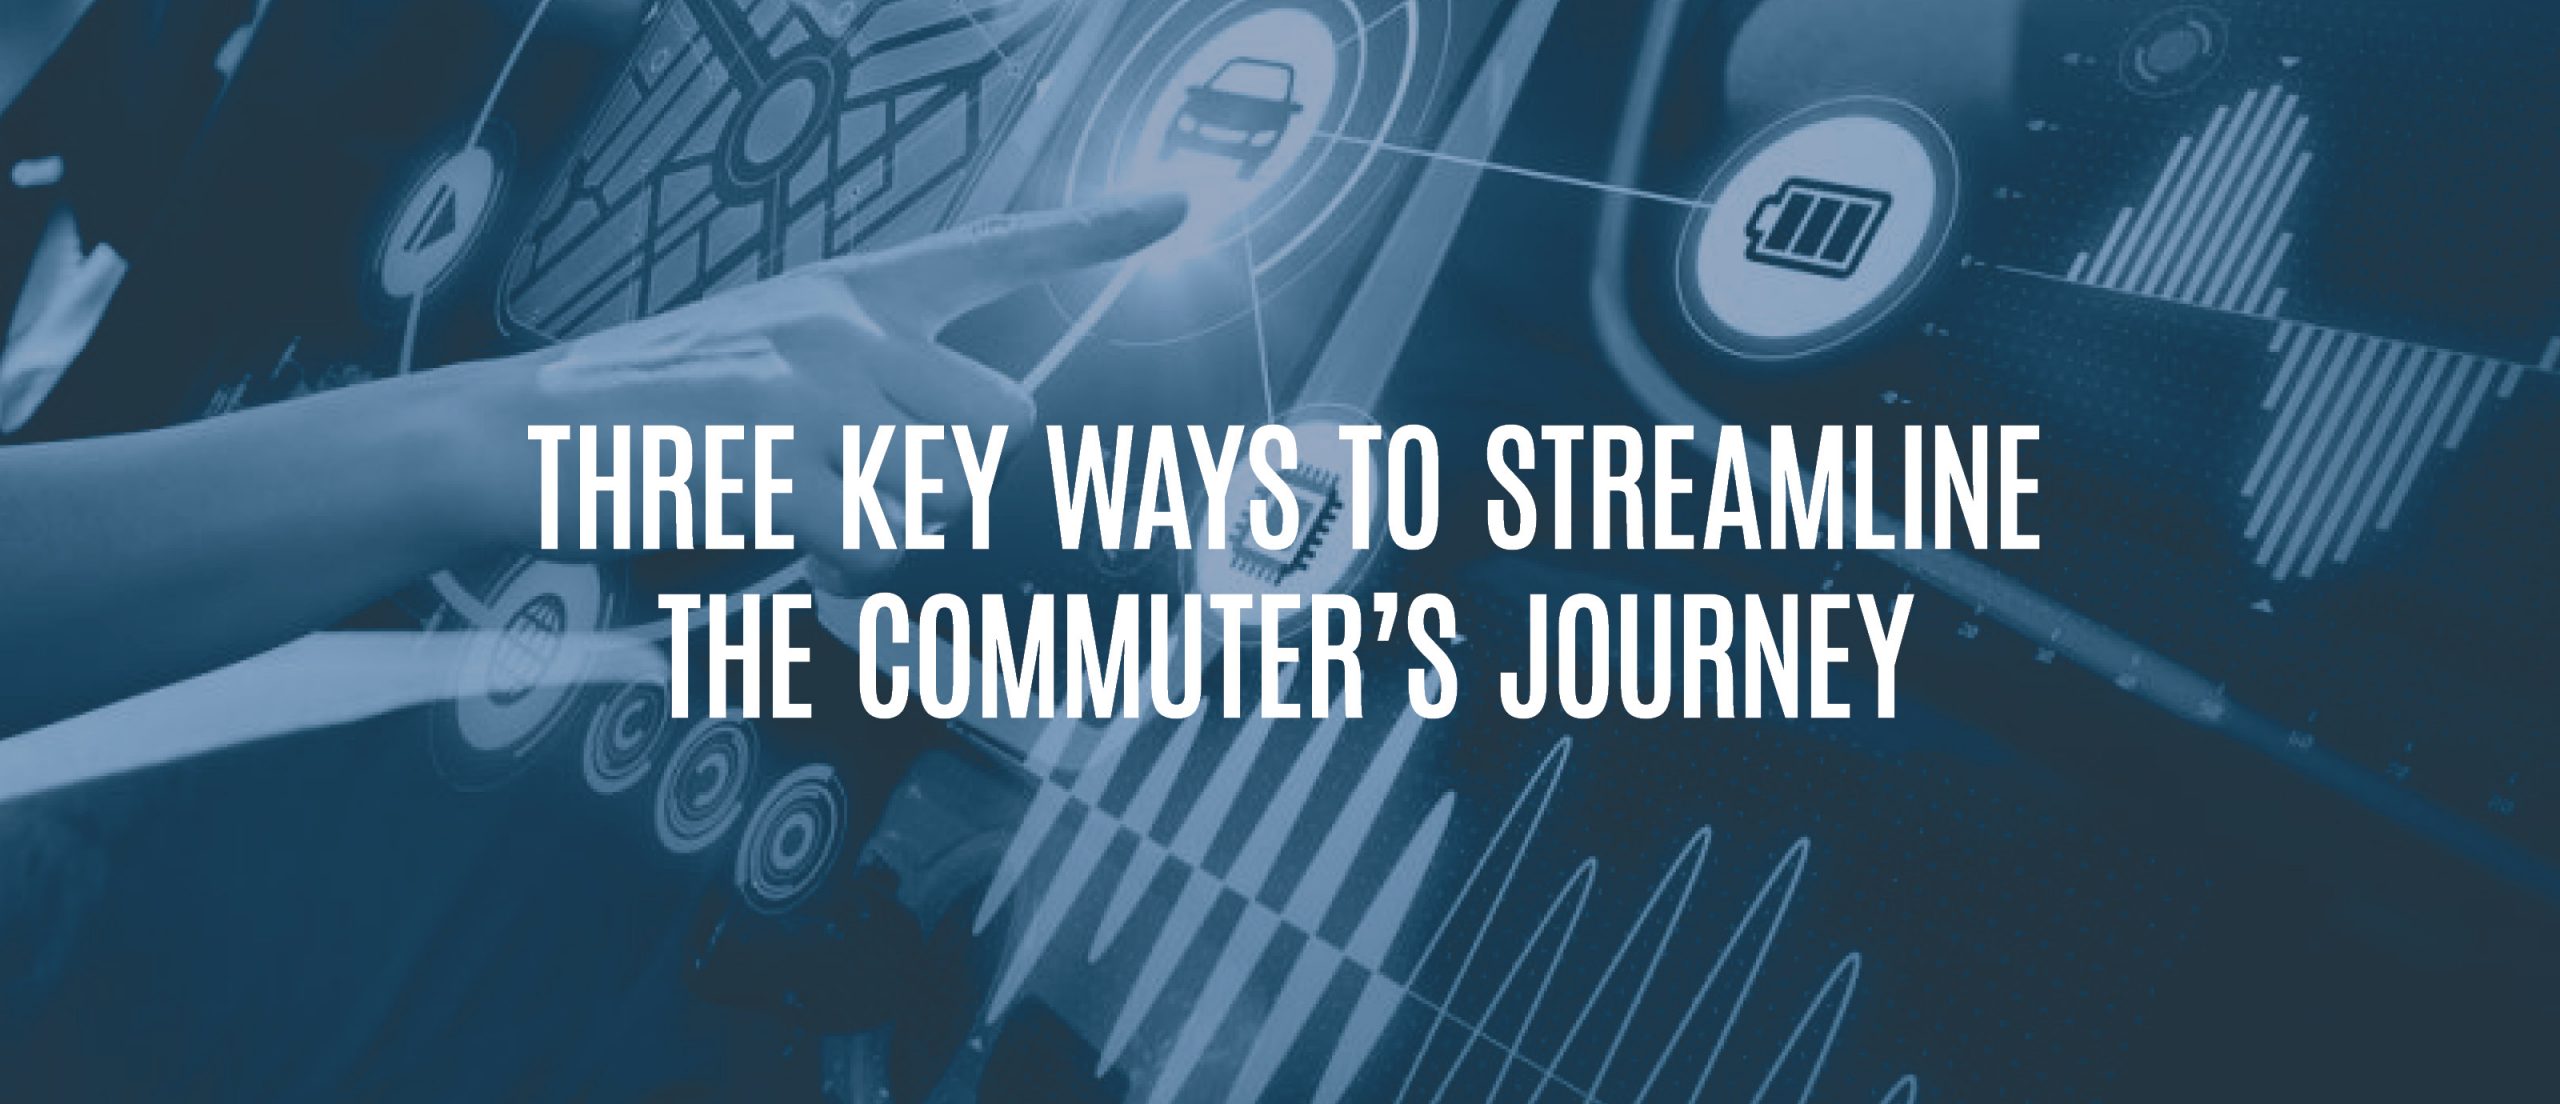 Blog Title - Three key ways to streamline the commuter's journey